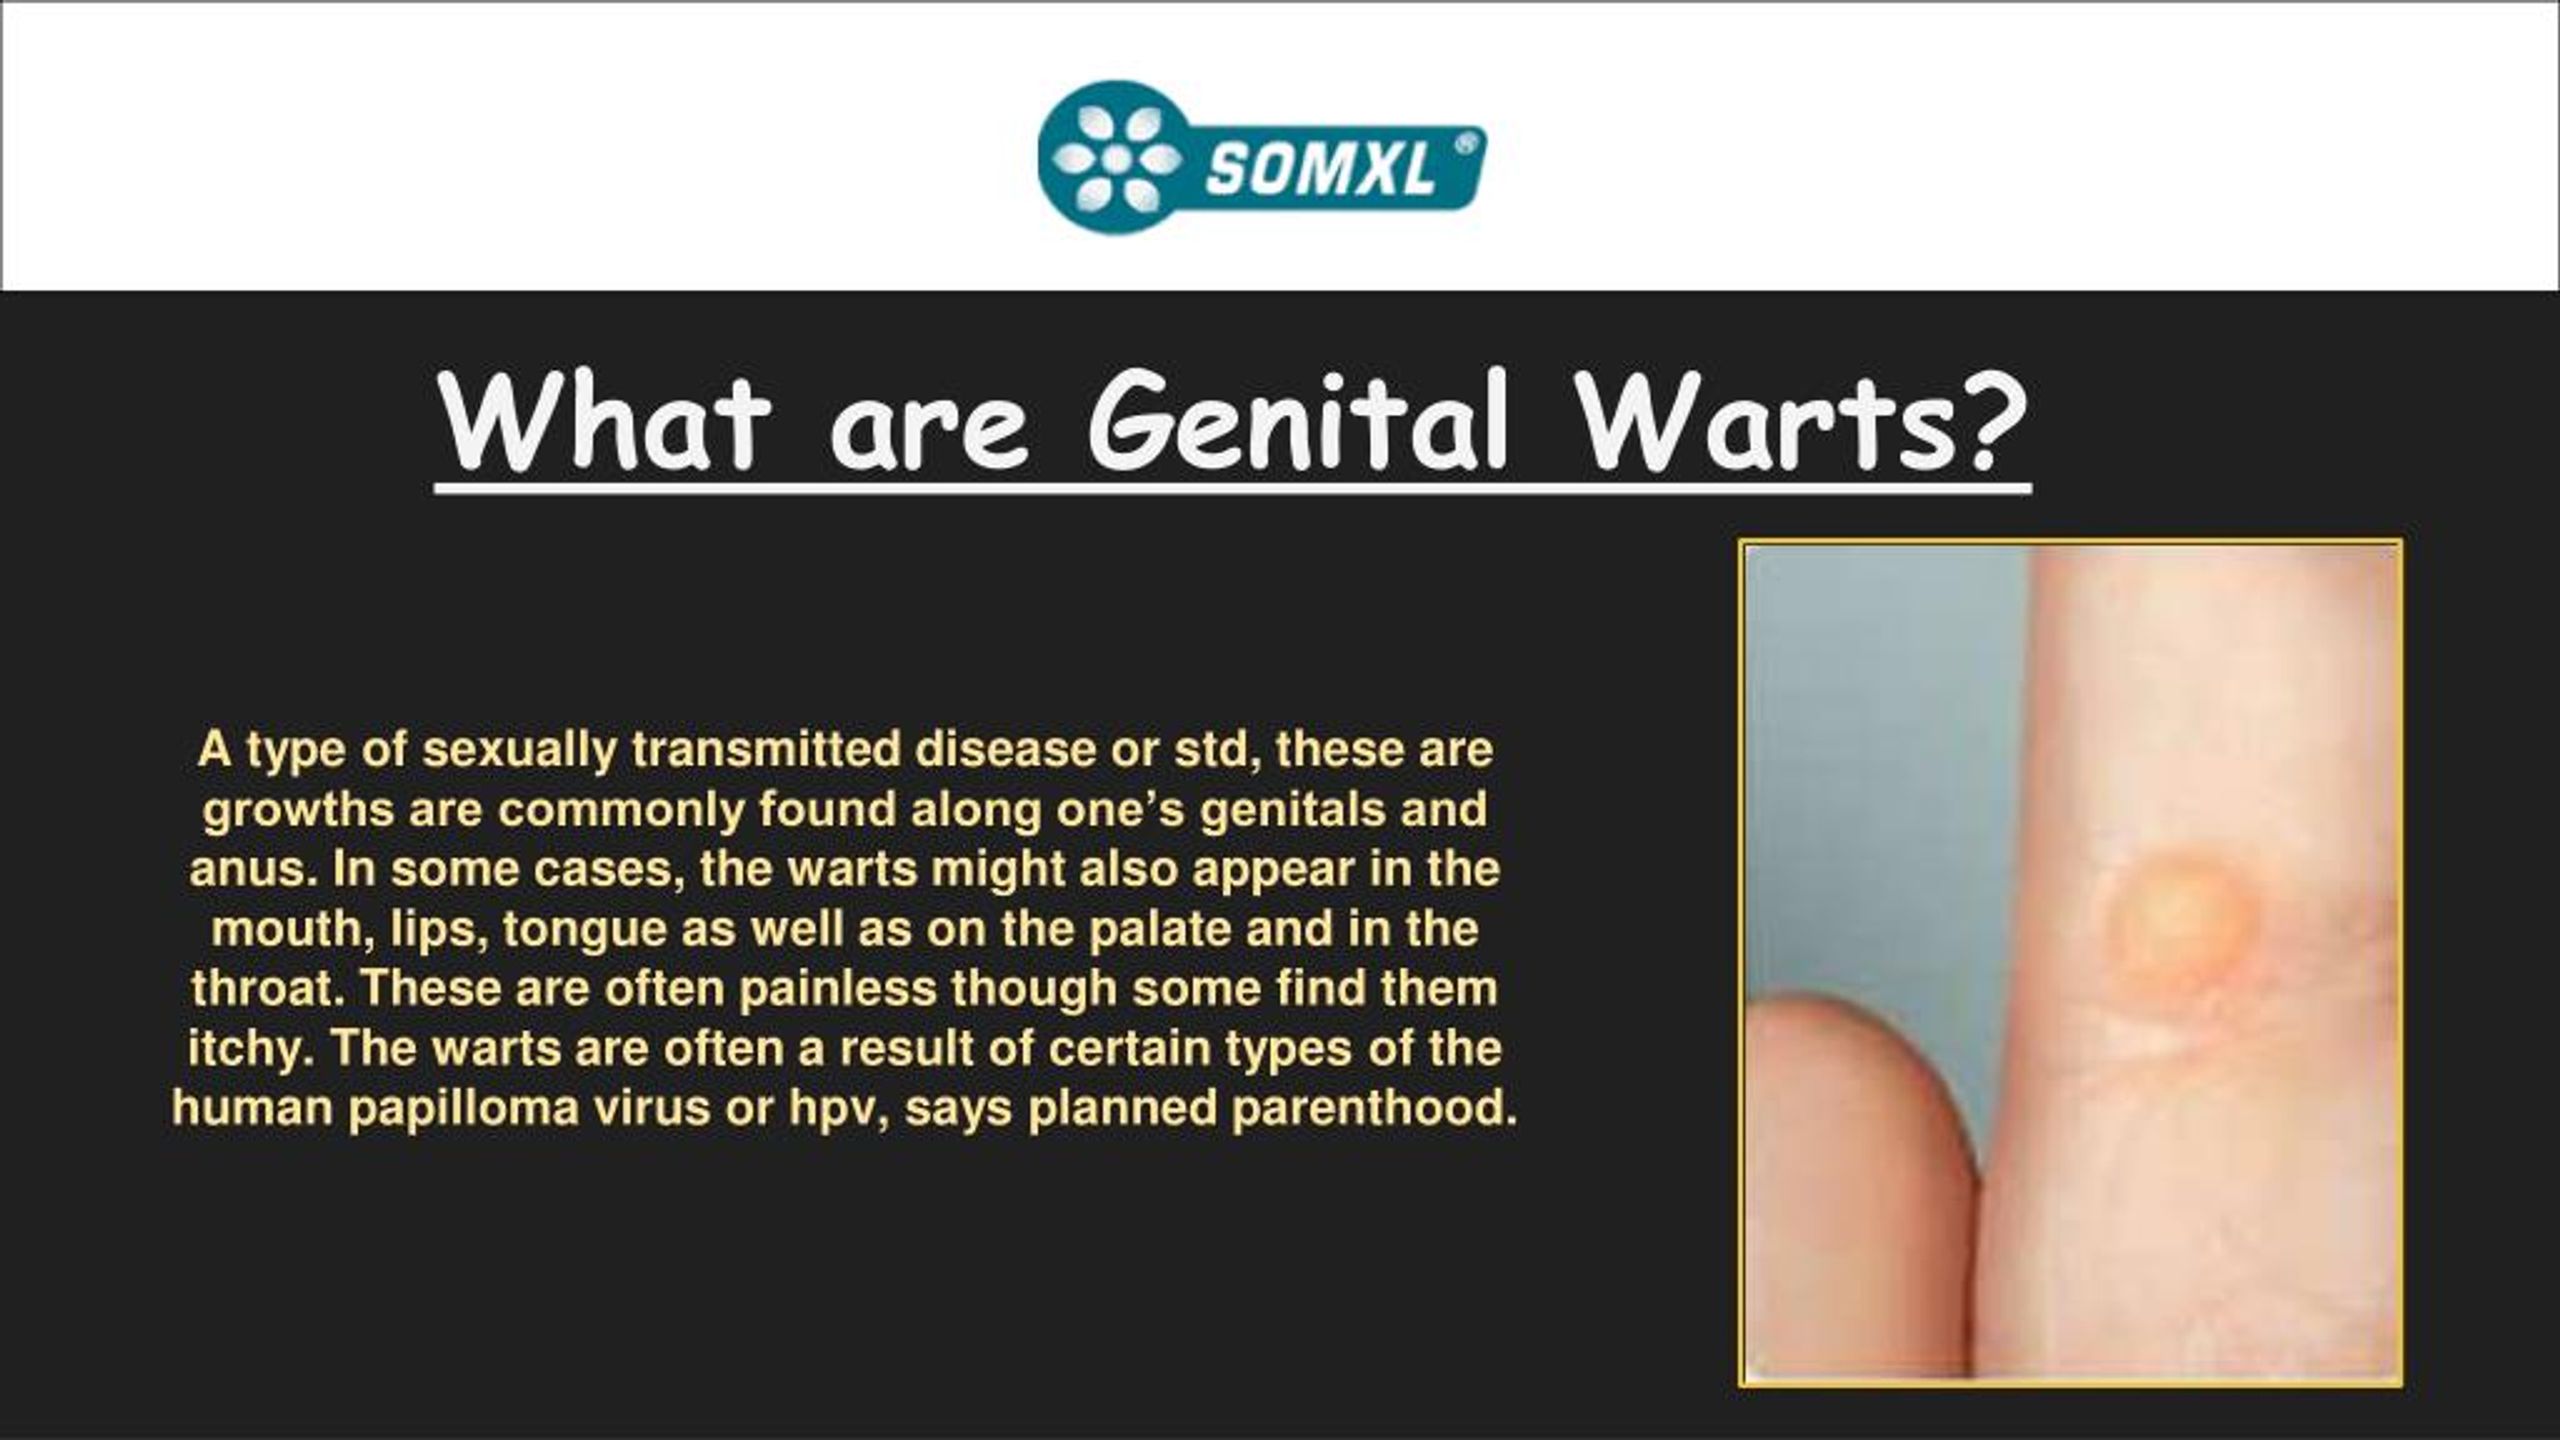 Ppt Get Rid Of Genital Wart By Somxl Wartcream Powerpoint Presentation Id 7806320